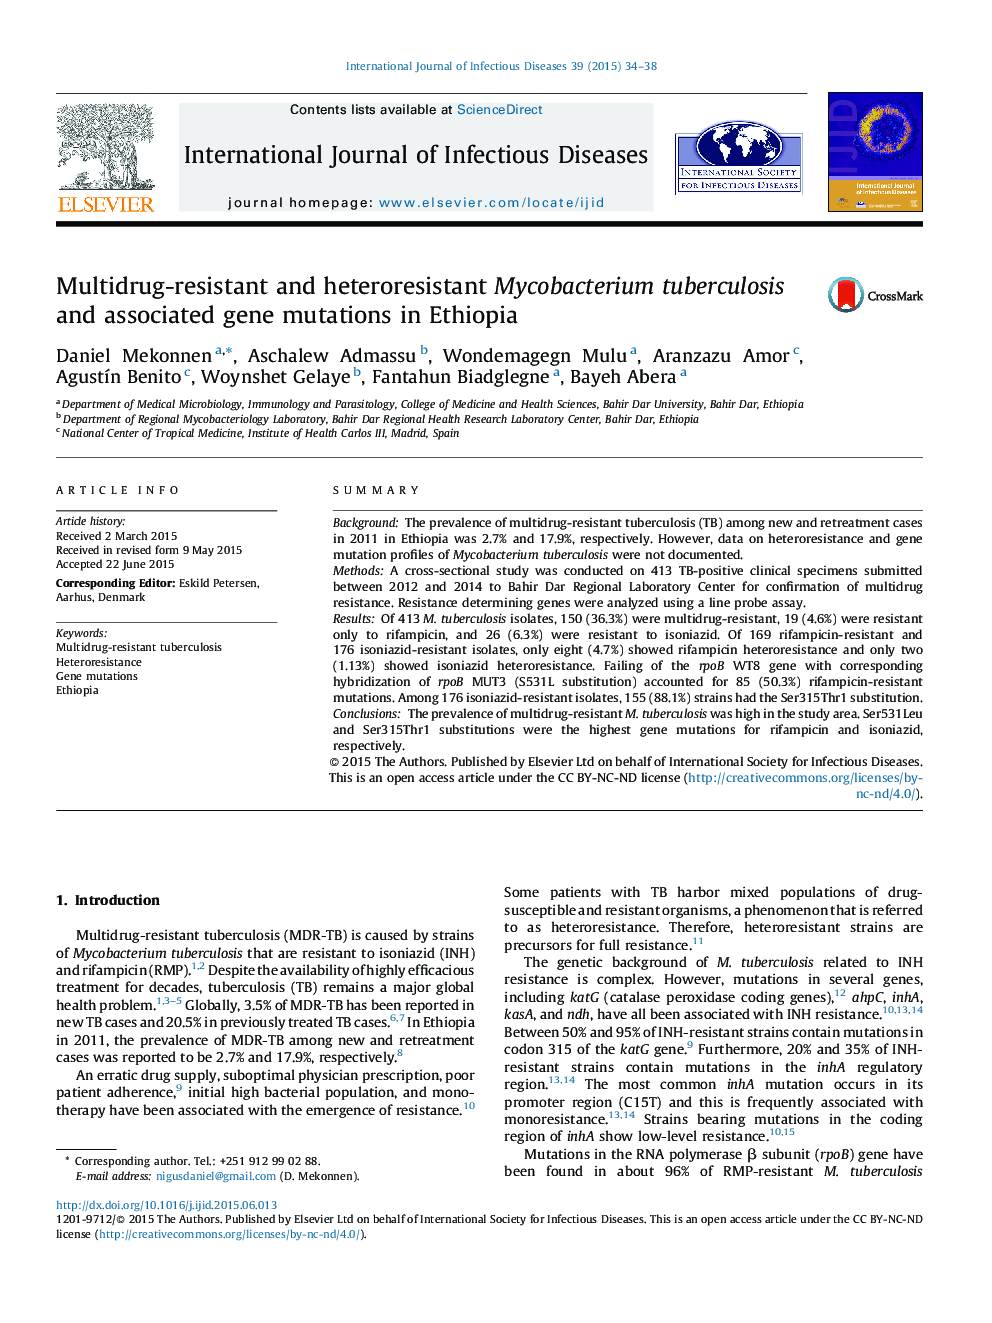 Multidrug-resistant and heteroresistant Mycobacterium tuberculosis and associated gene mutations in Ethiopia